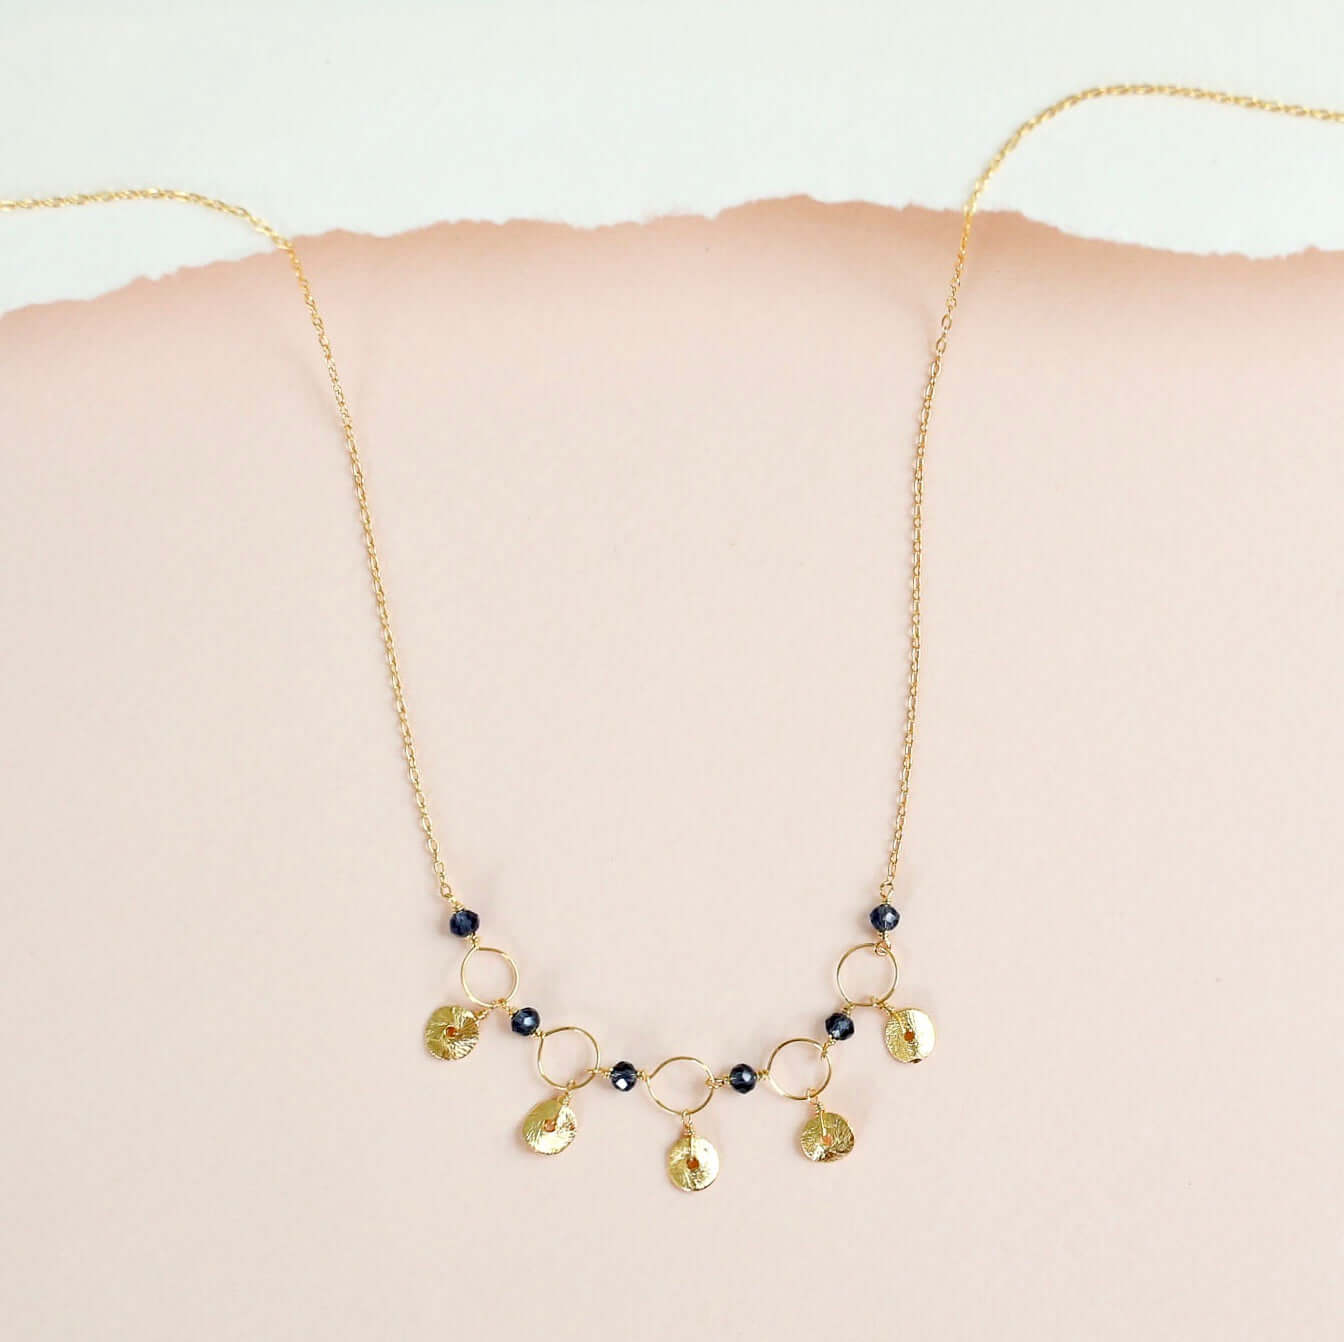 Handmade gemstone chain with Black Spinel gemstones Gold Necklace